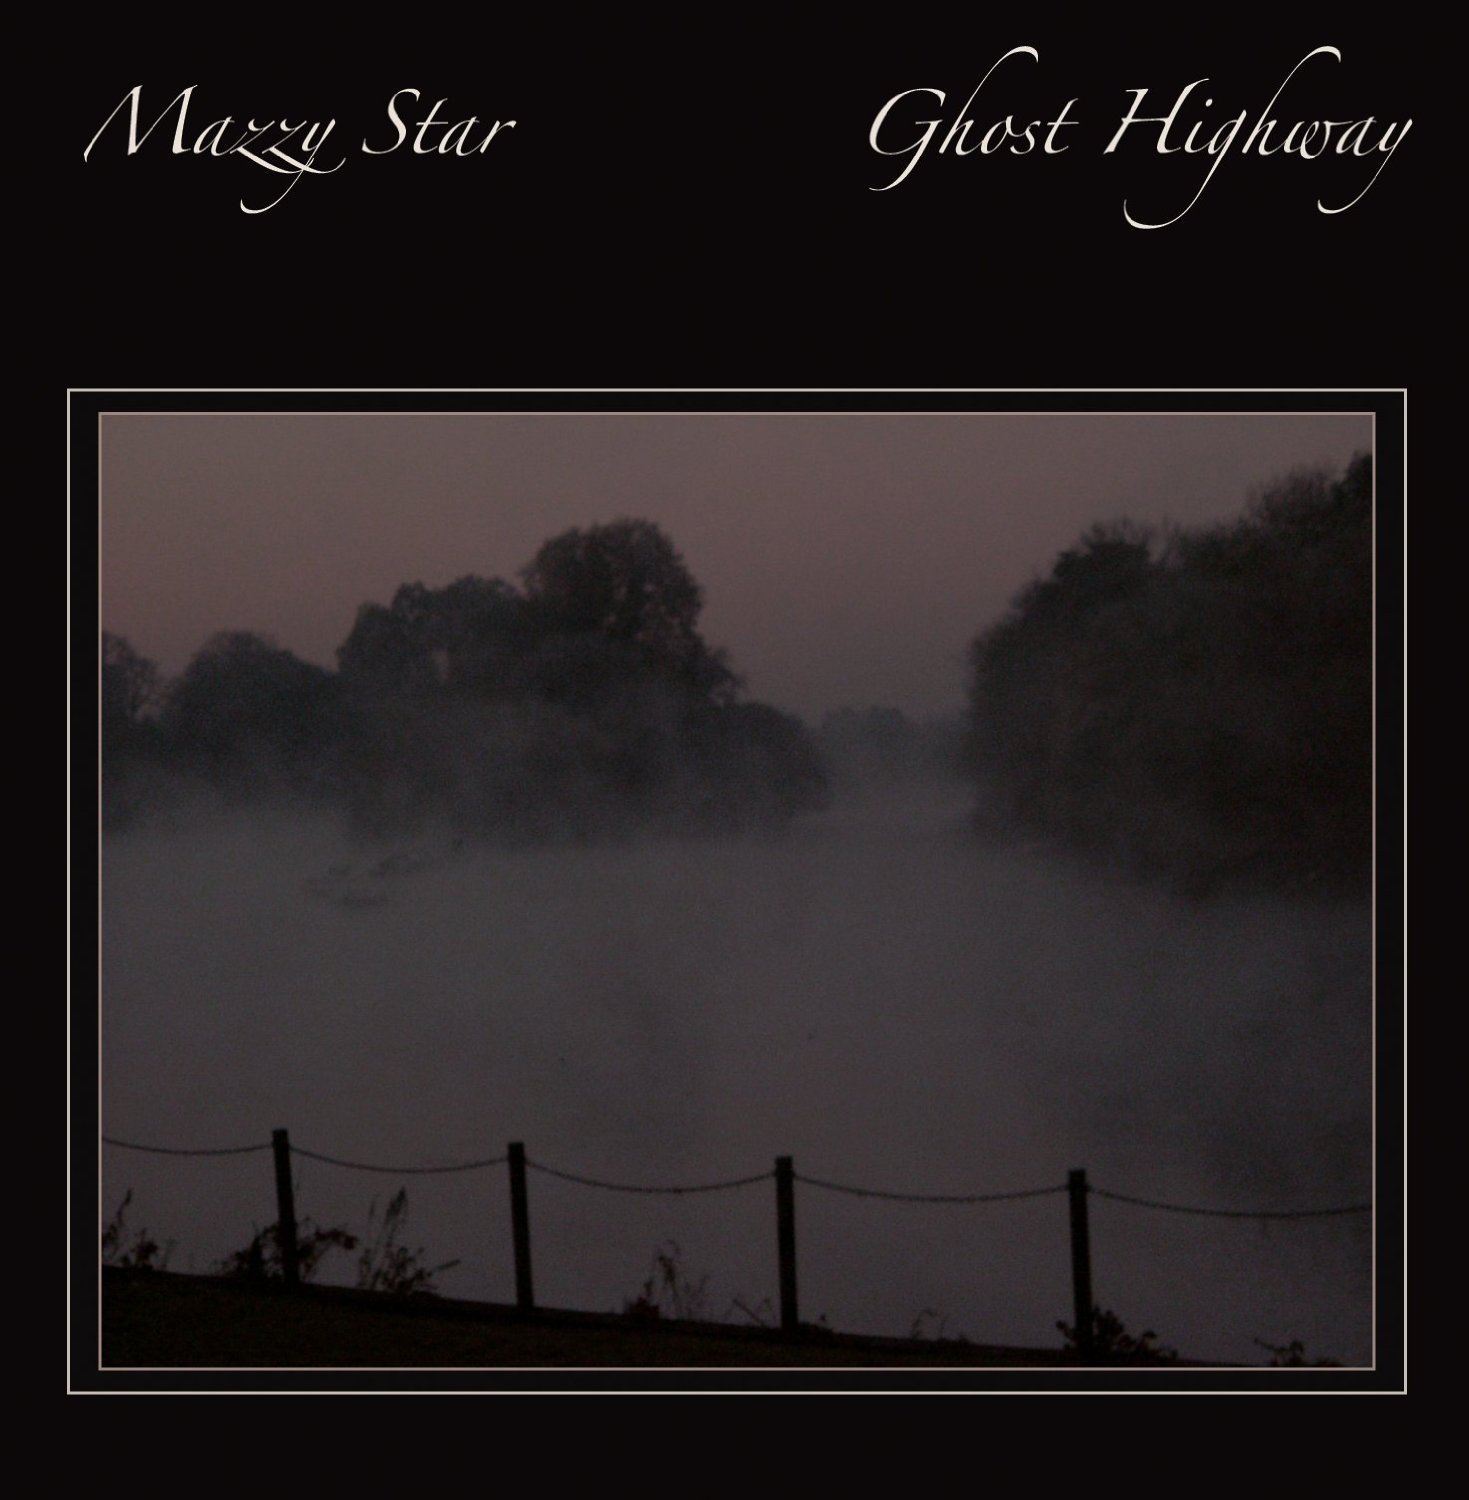 Mazzy Star "Ghost Highway" LP